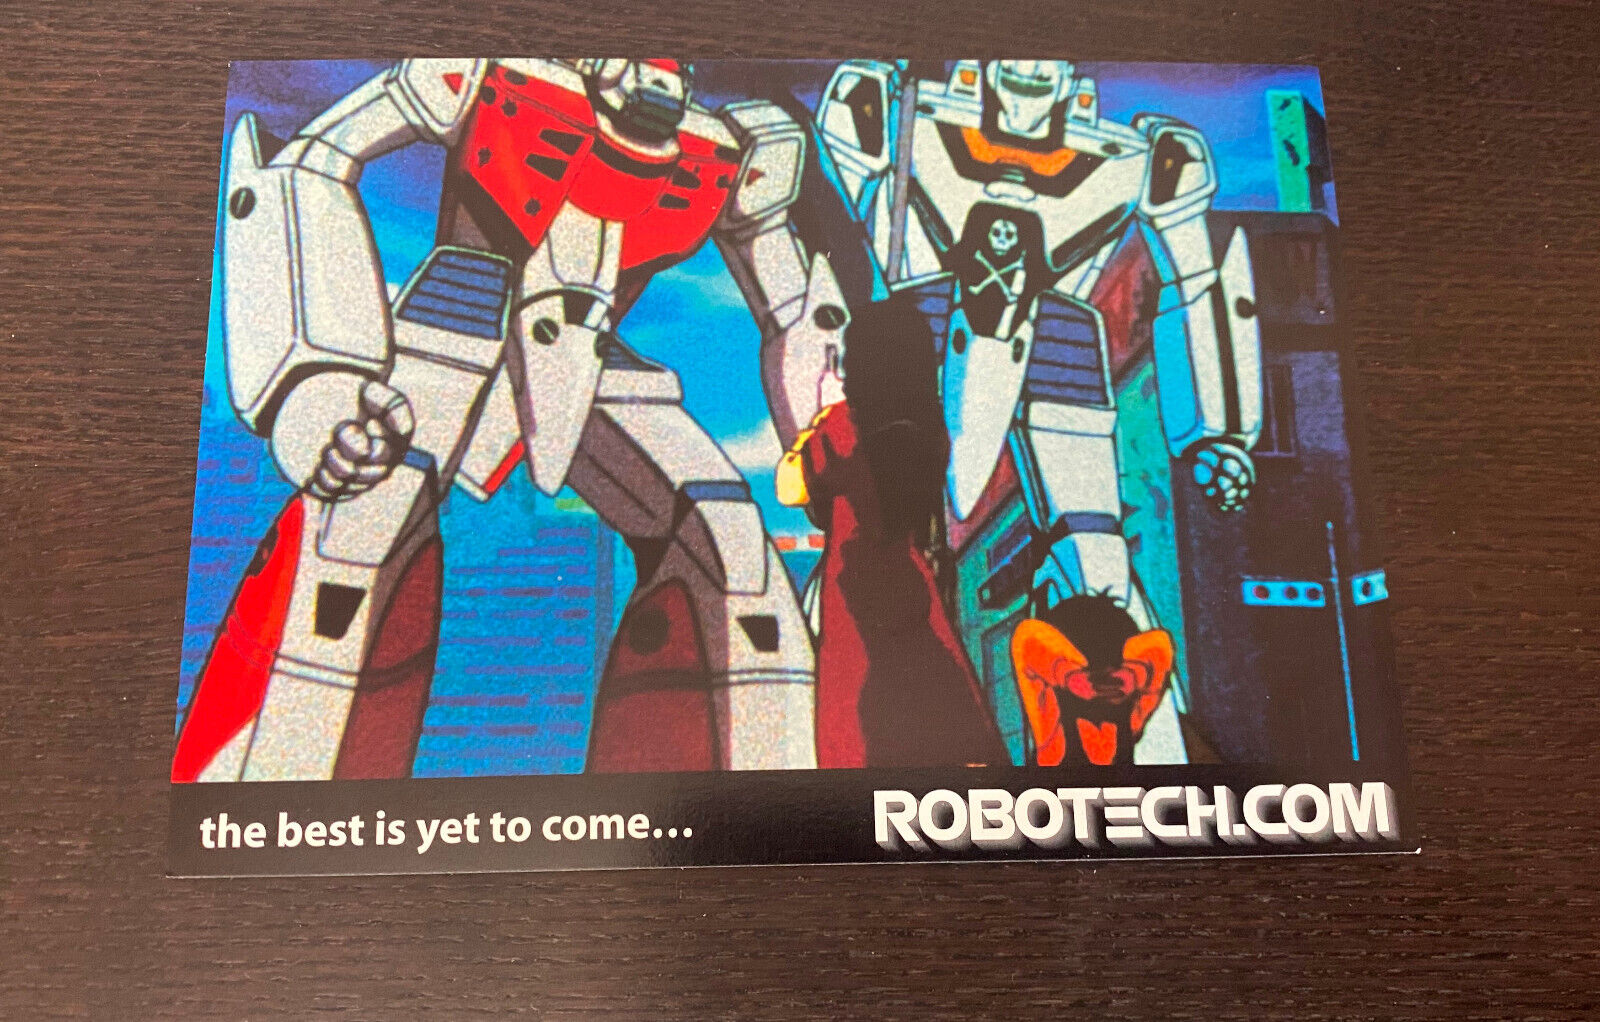 ROBOTECH Promotional Postcard (2000 Official Website)